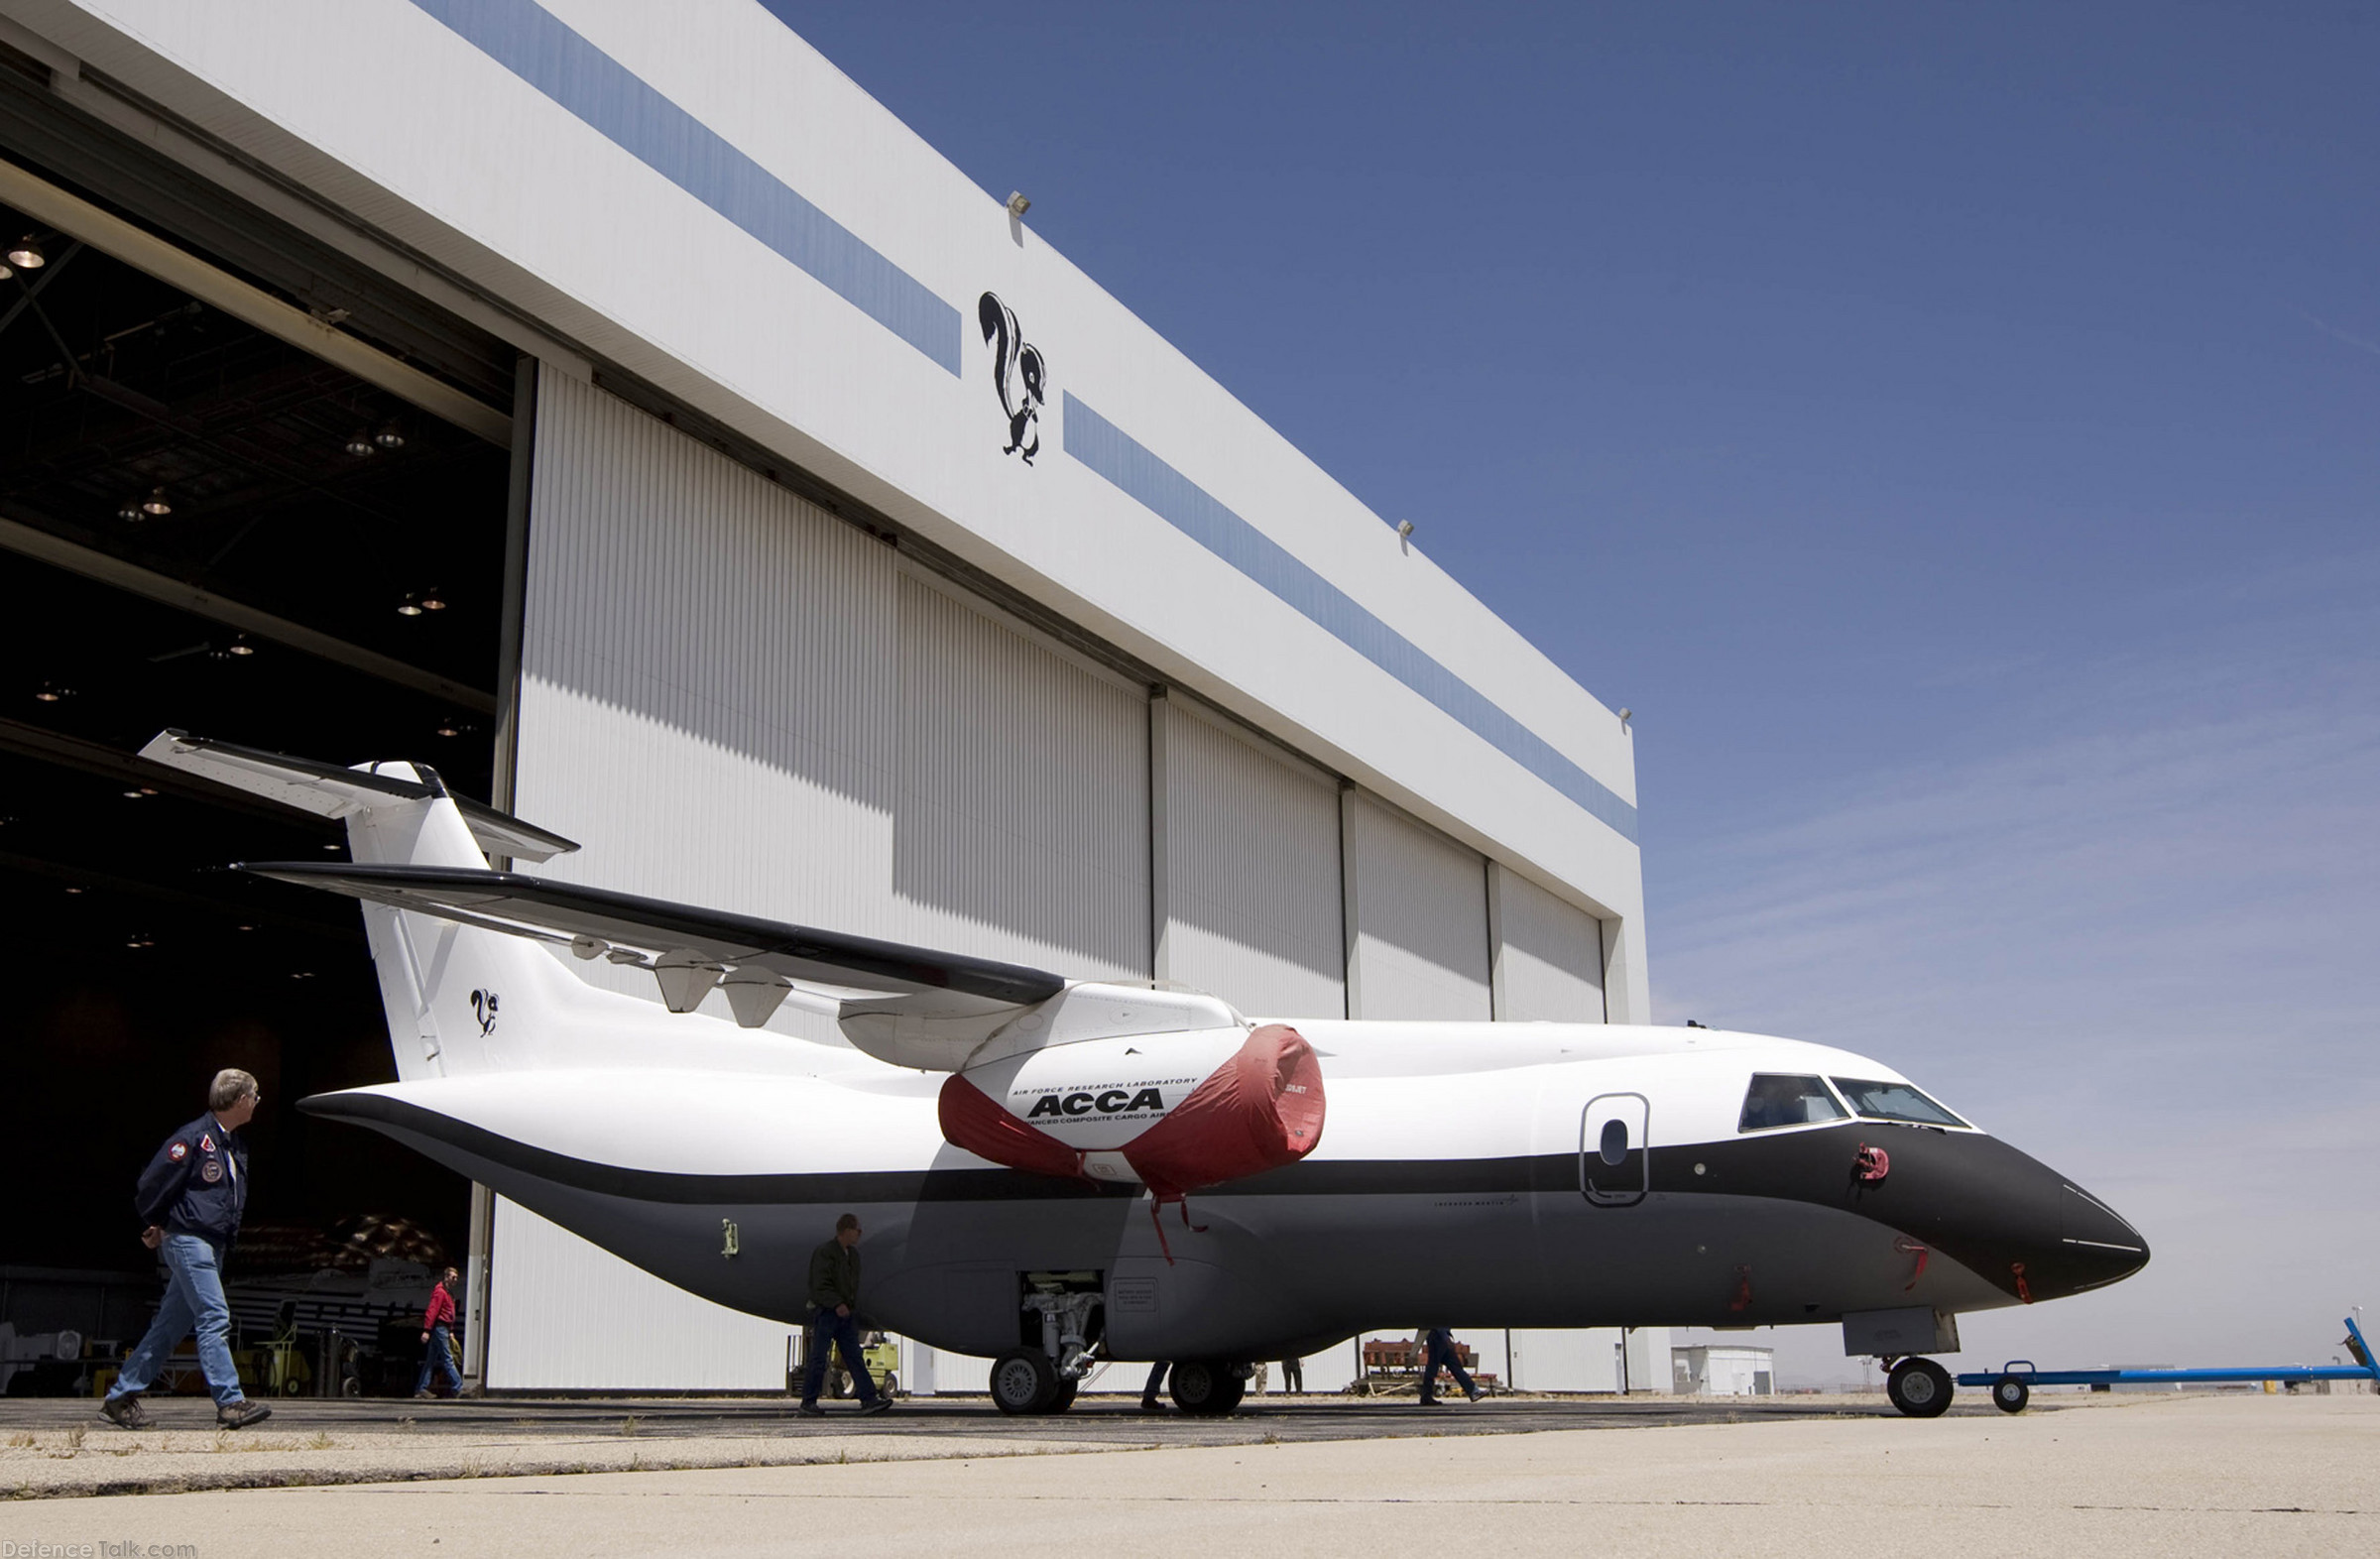 Advanced Composite Cargo Aircraft